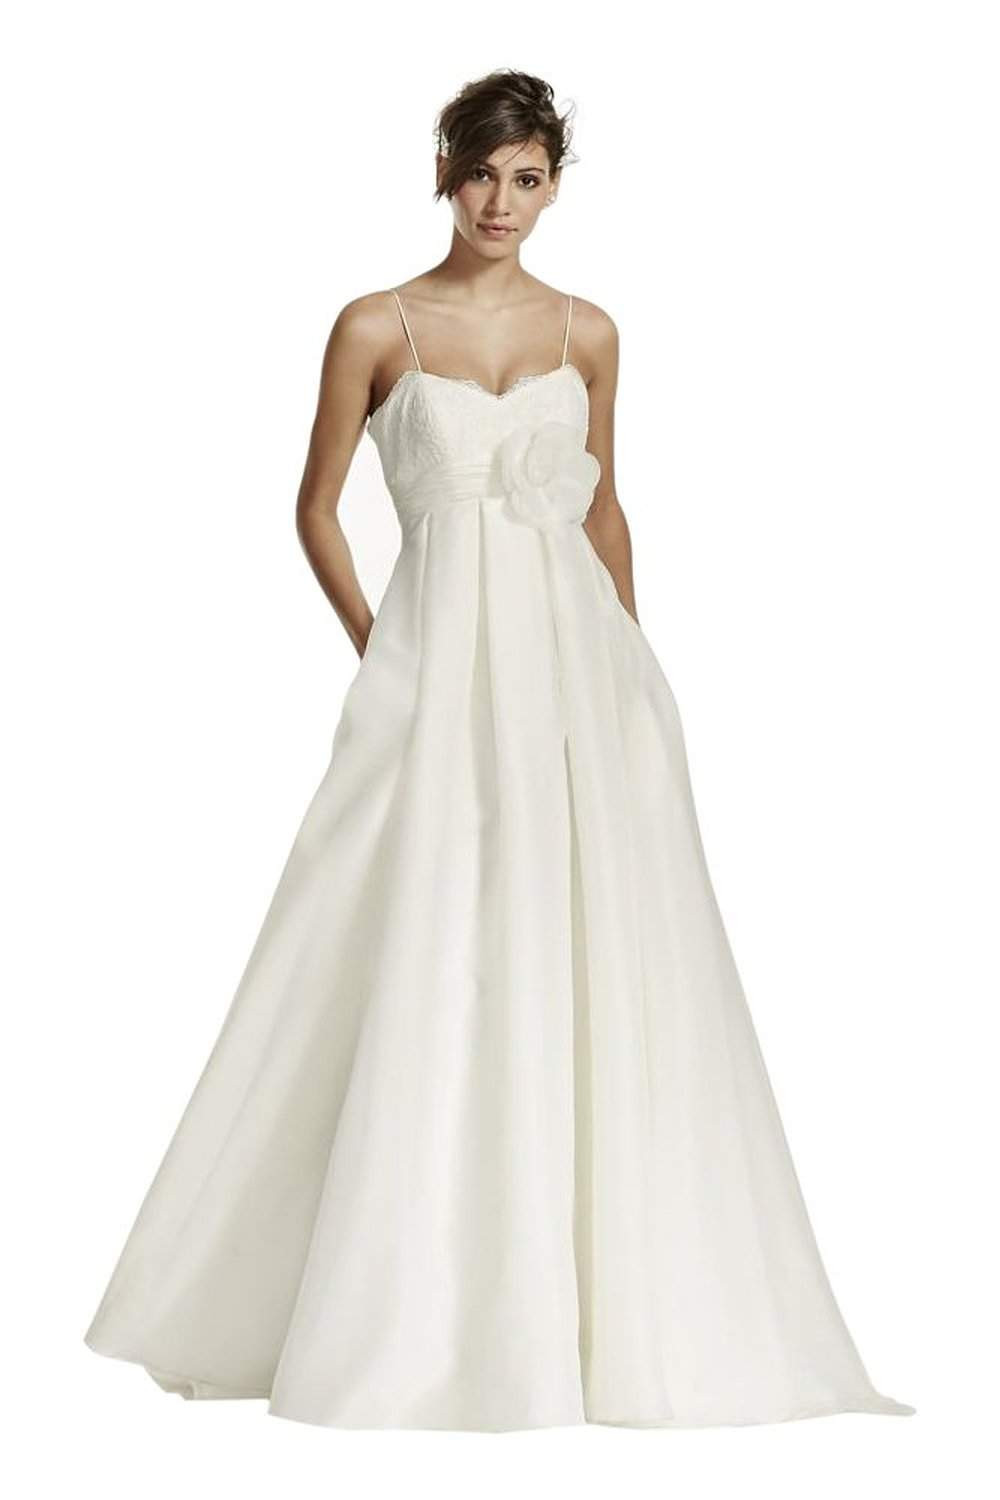 Discount Wedding Dress
 Top 50 Best Cheap Wedding Dresses pare Buy & Save